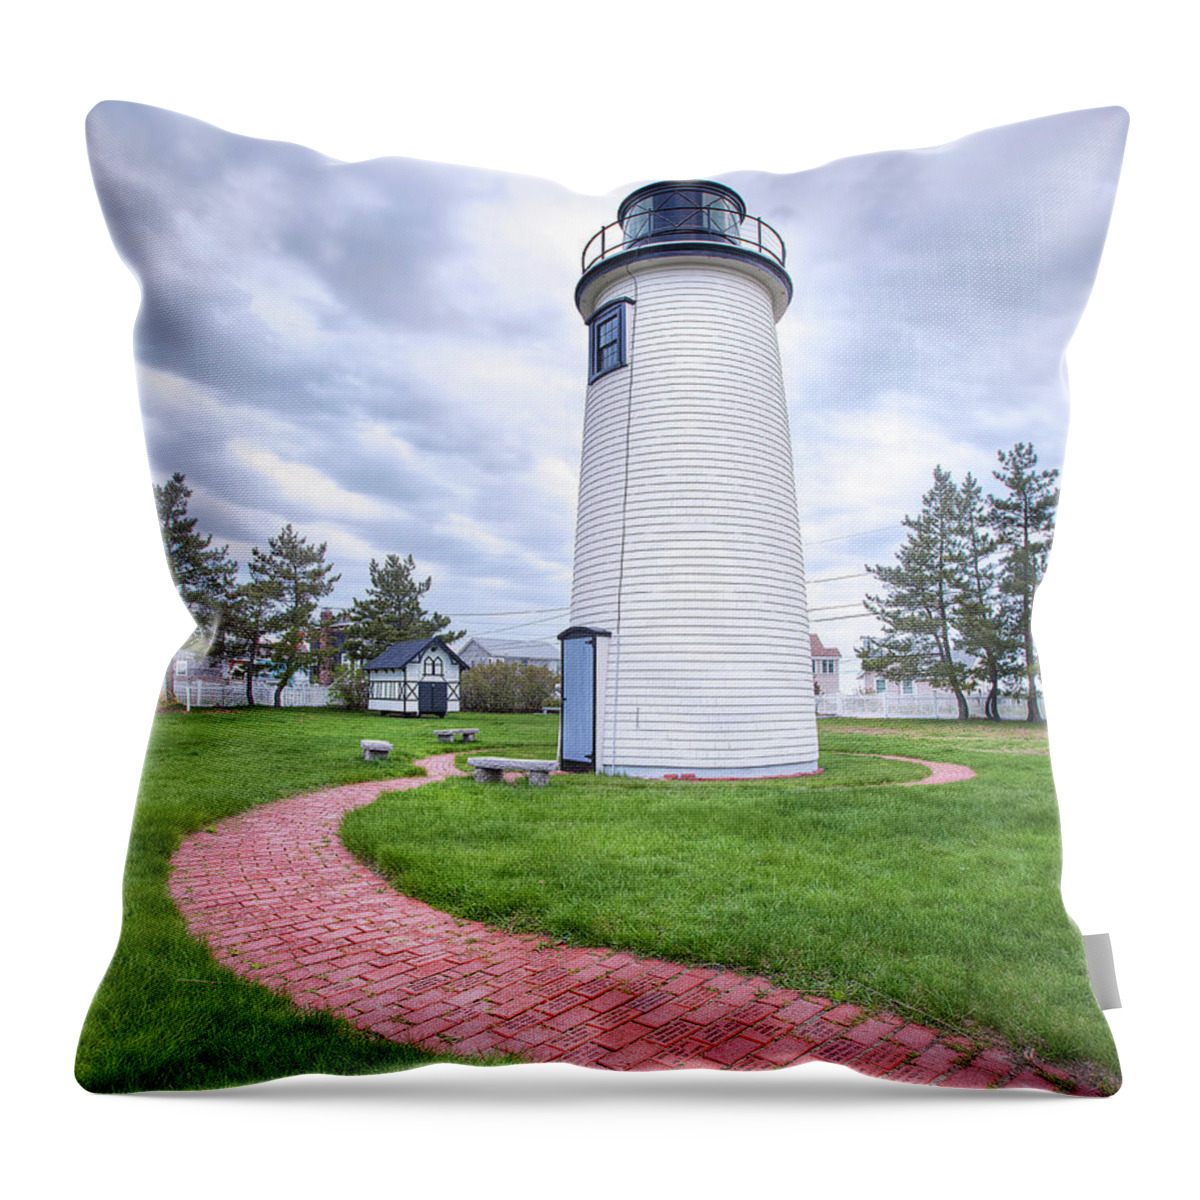 Plum Island Lighthouse Throw Pillow featuring the photograph Plum Island Lighthouse by Eric Gendron